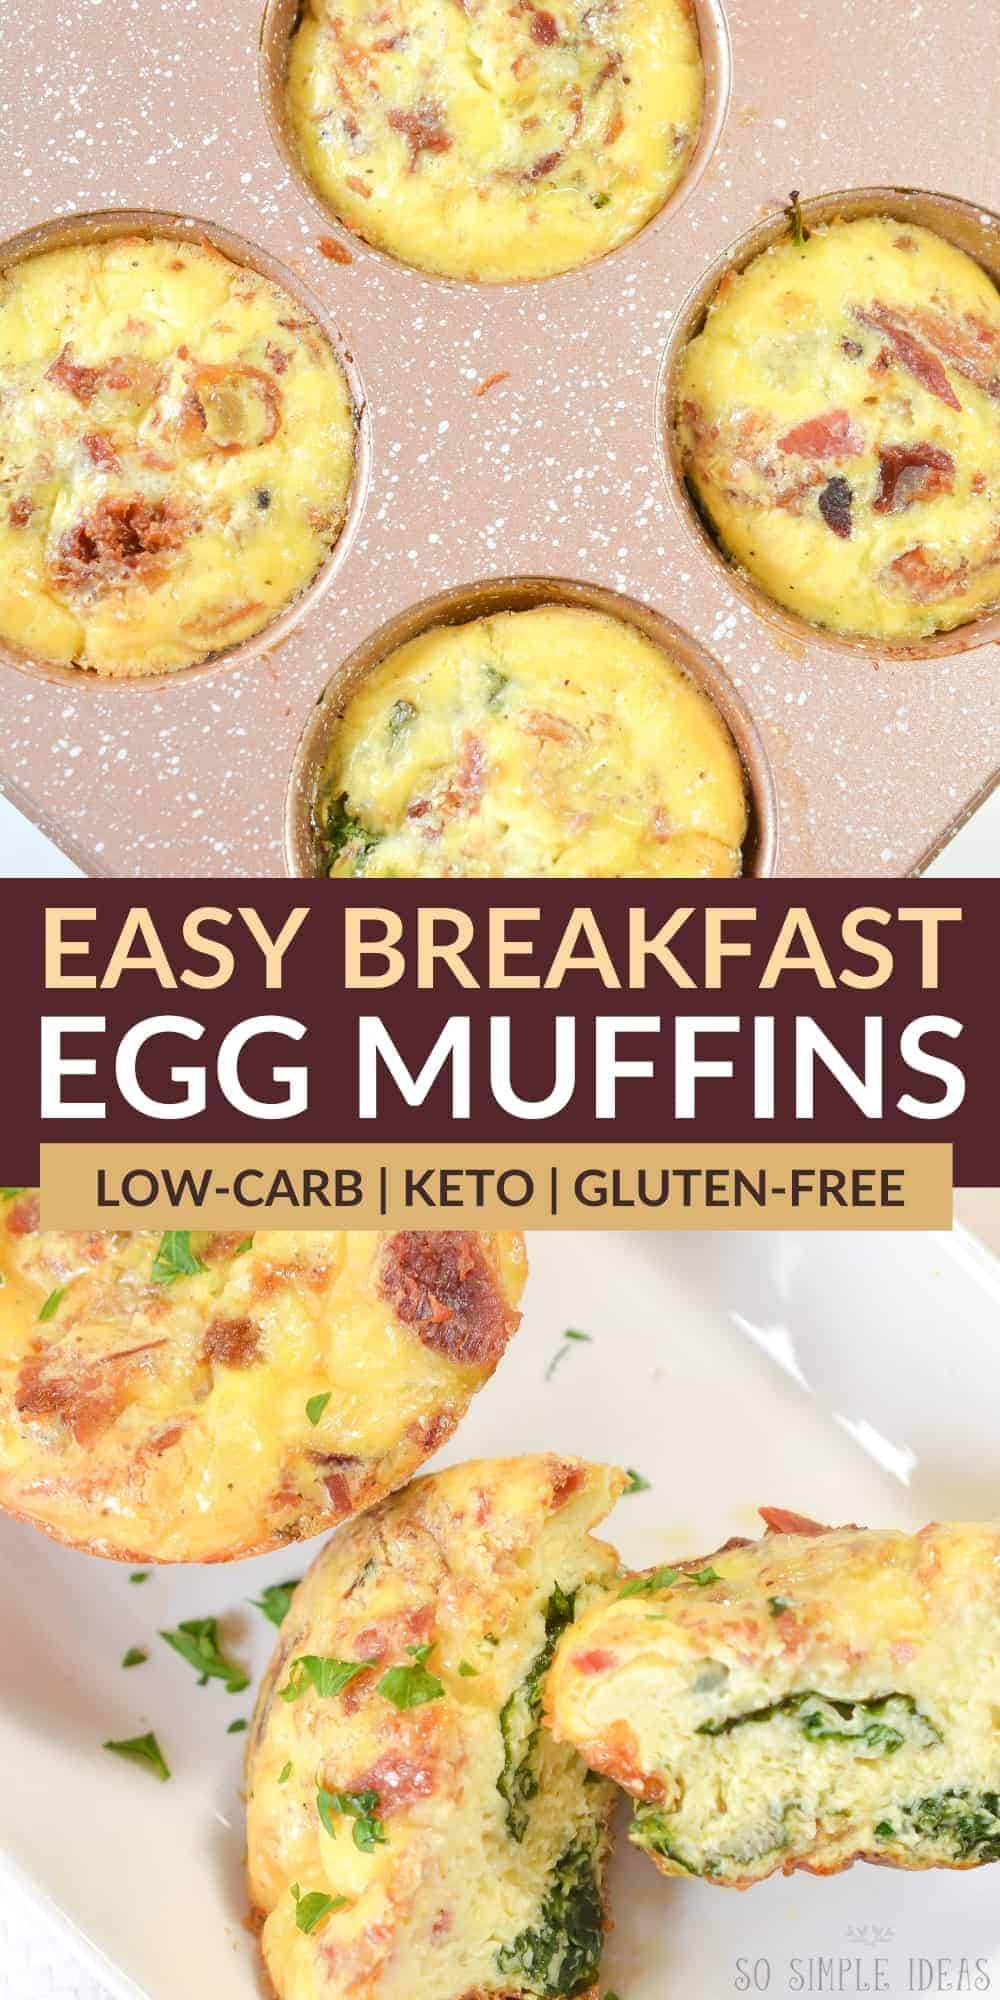 Keto Egg Muffins With Heavy Cream (Gluten-Free) - So Simple Ideas